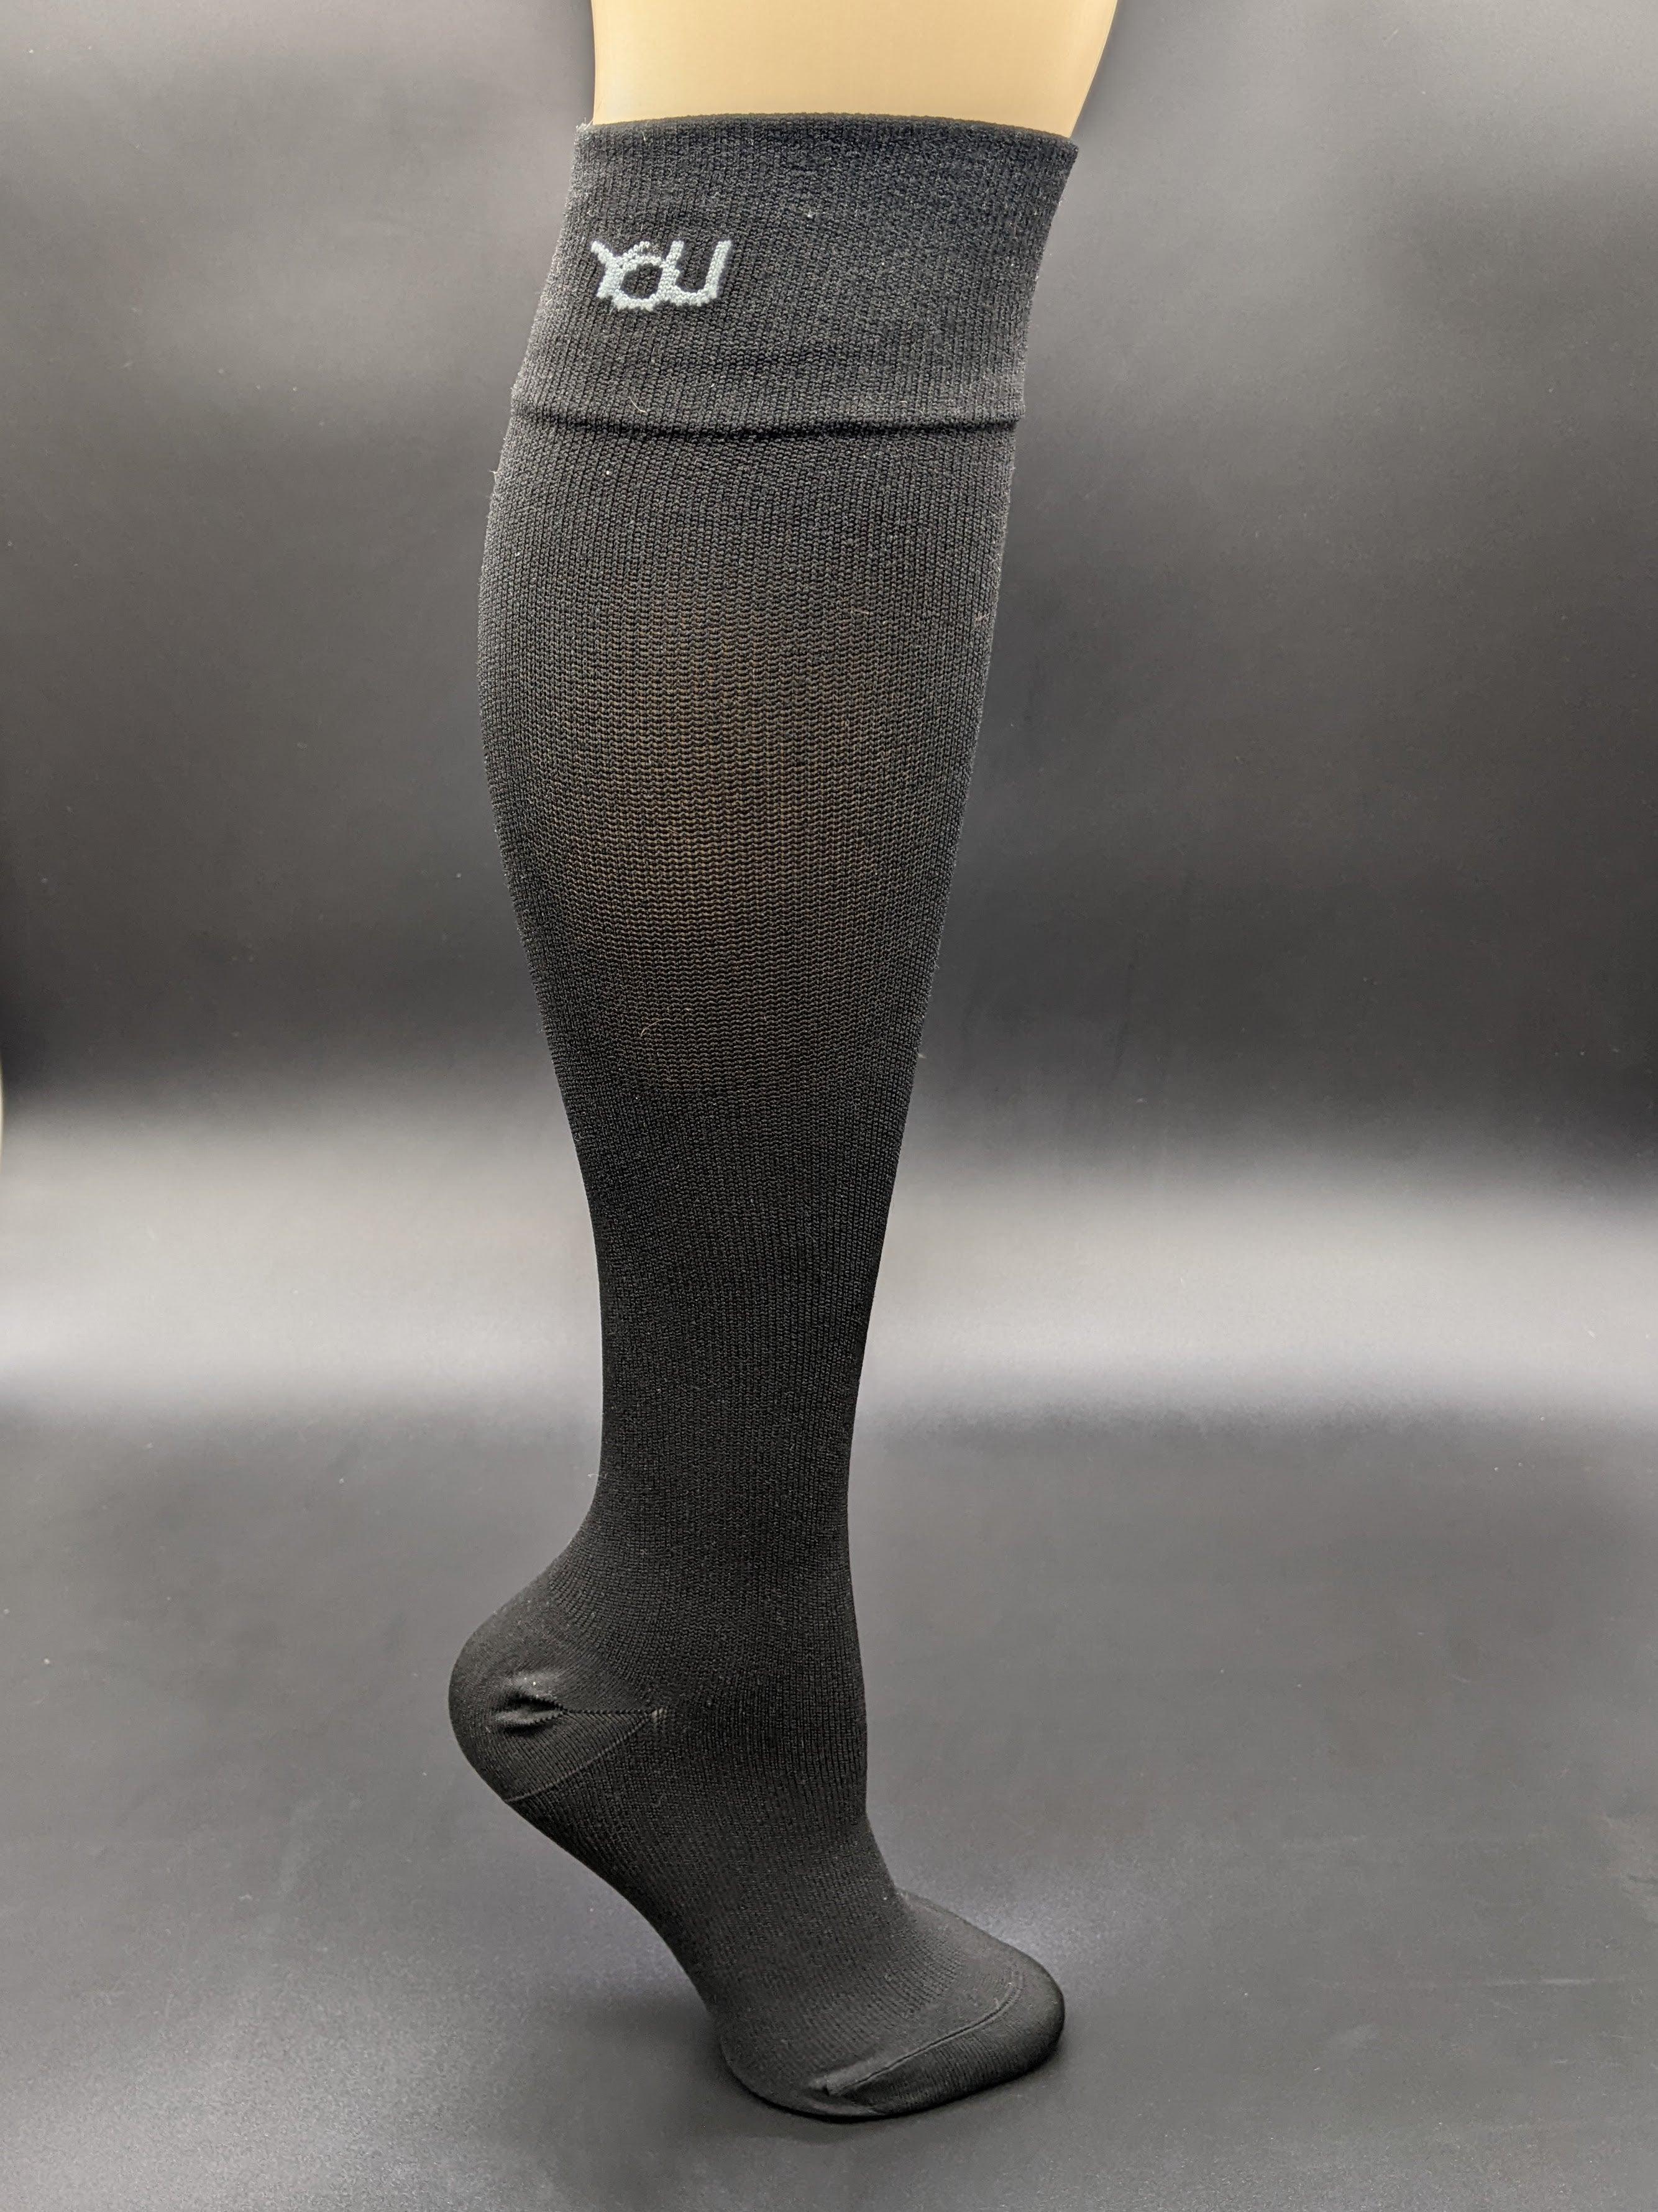 Bundle A (1 Pair Socks ) 20-30 mmHg  Compression socks, Compression calf  sleeves, Calf compression socks